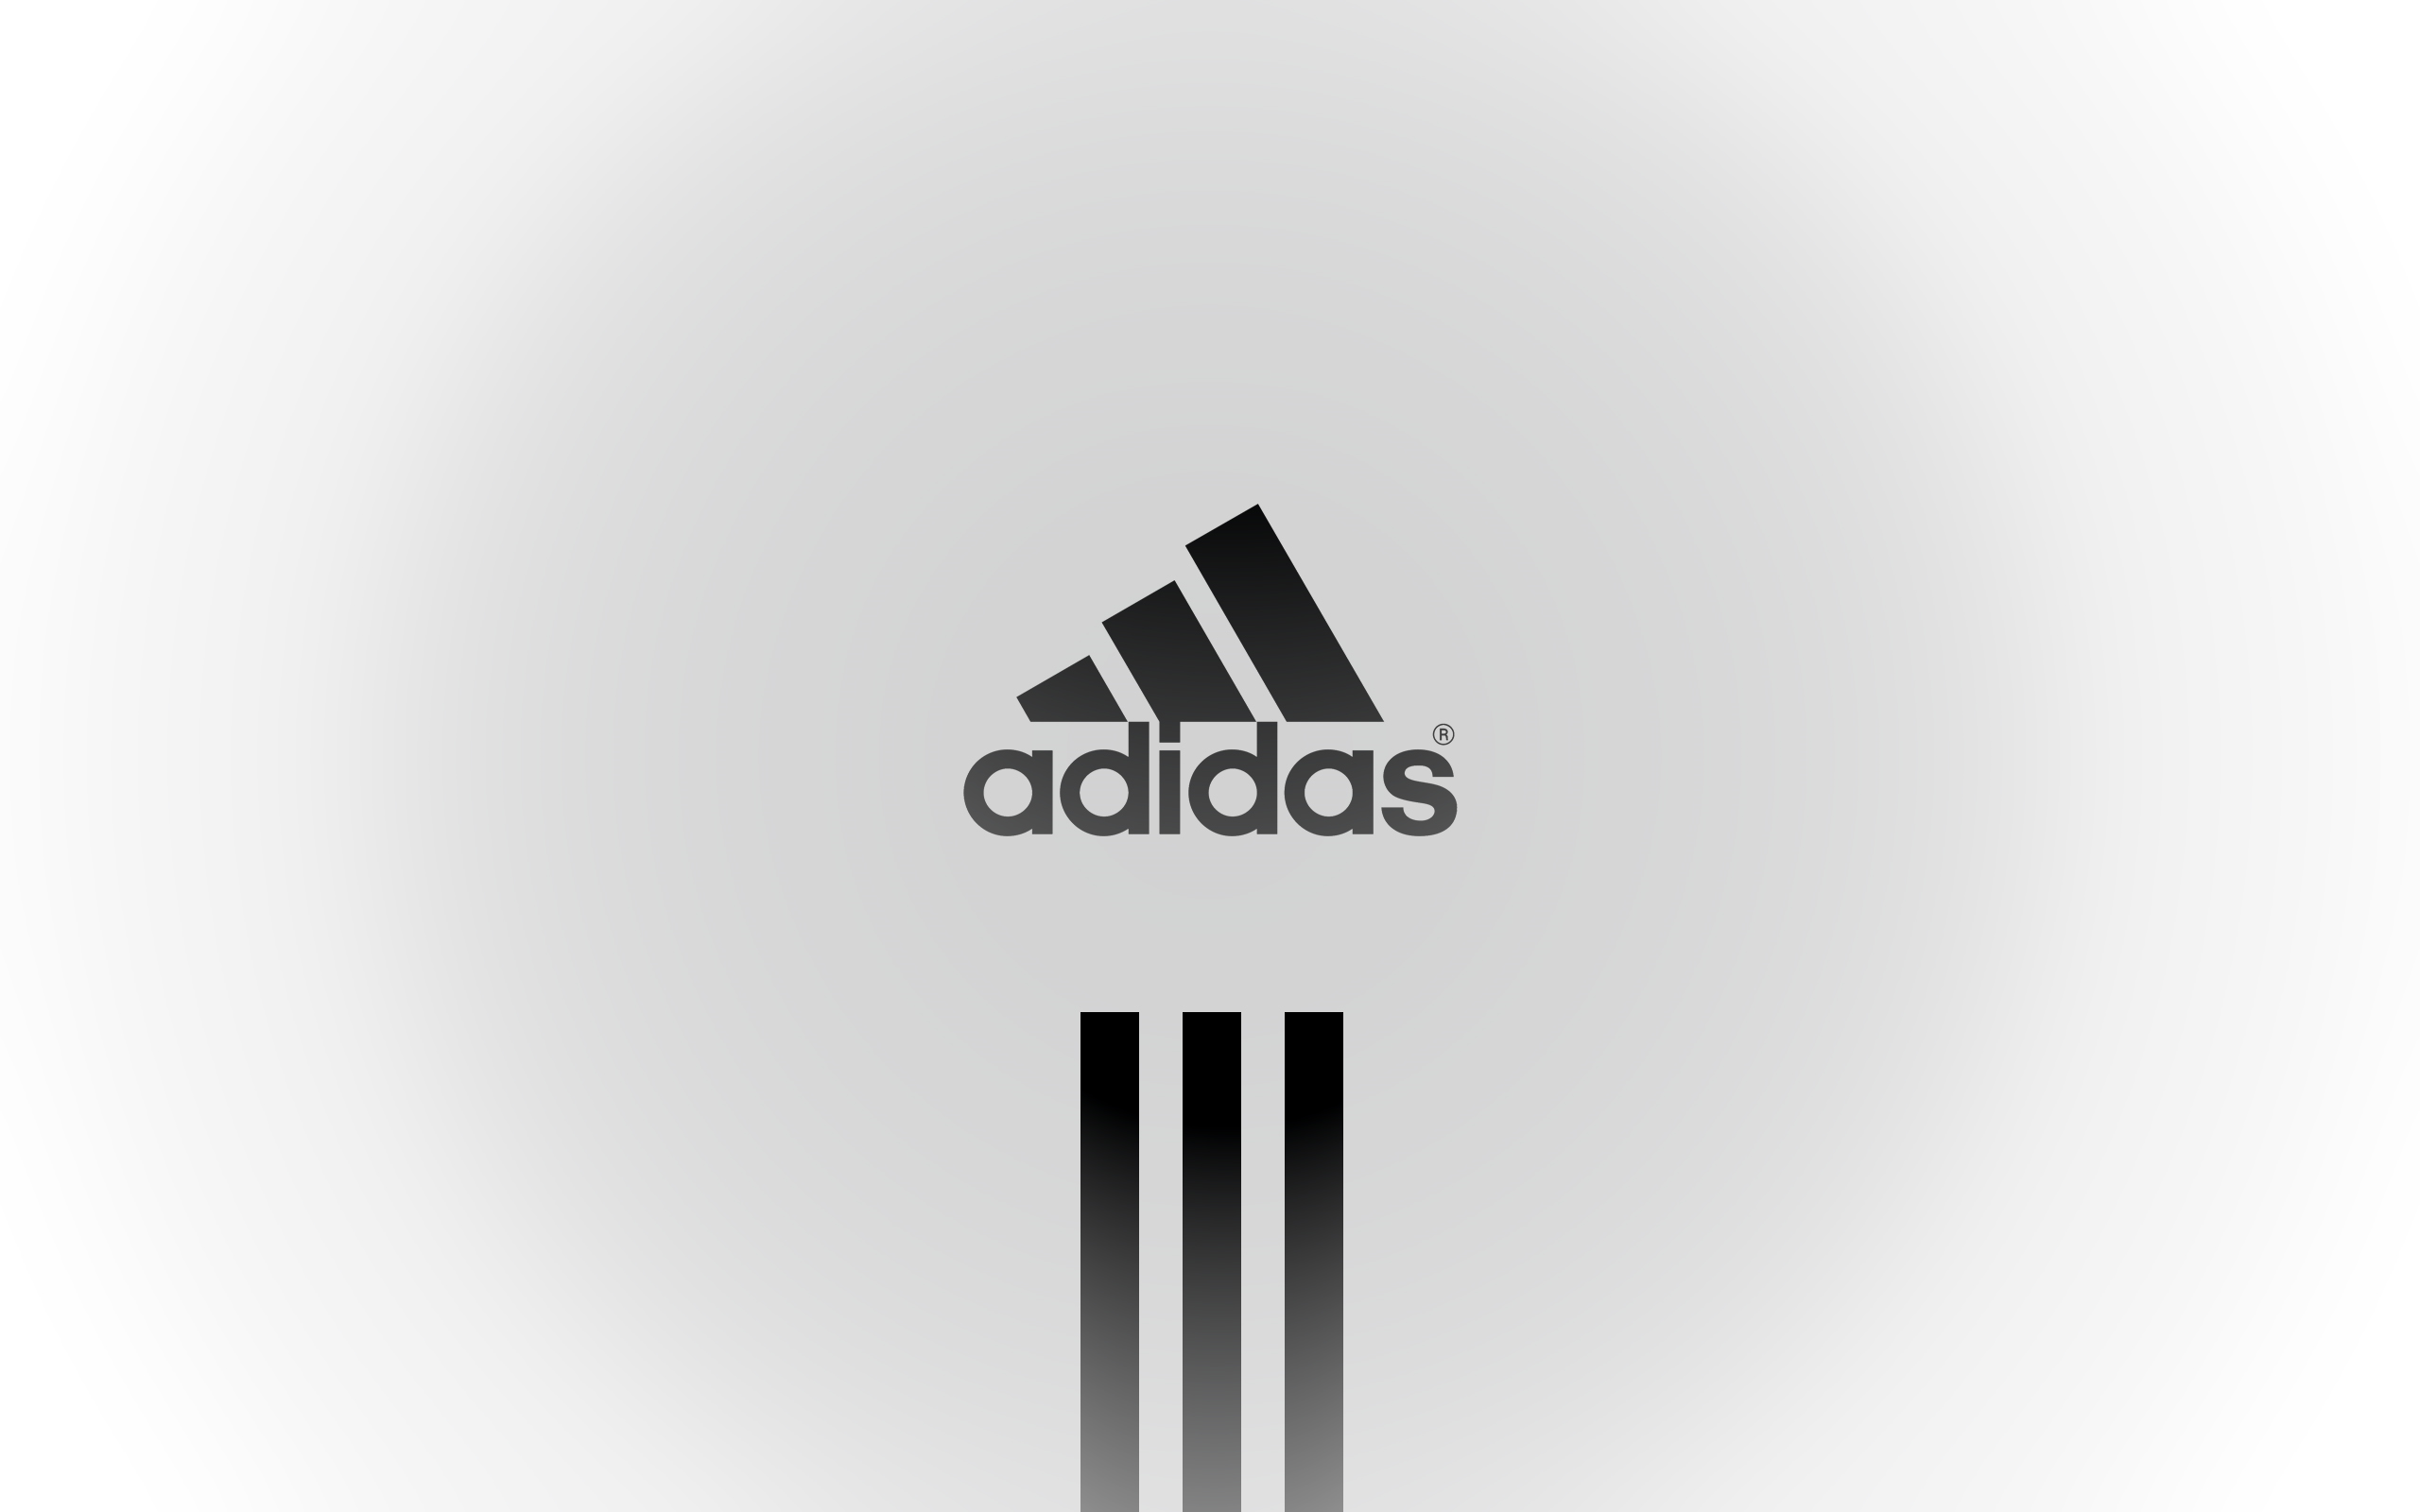  Coole Adidas Hintergrundbild 2560x1600. Adidas Wallpaper